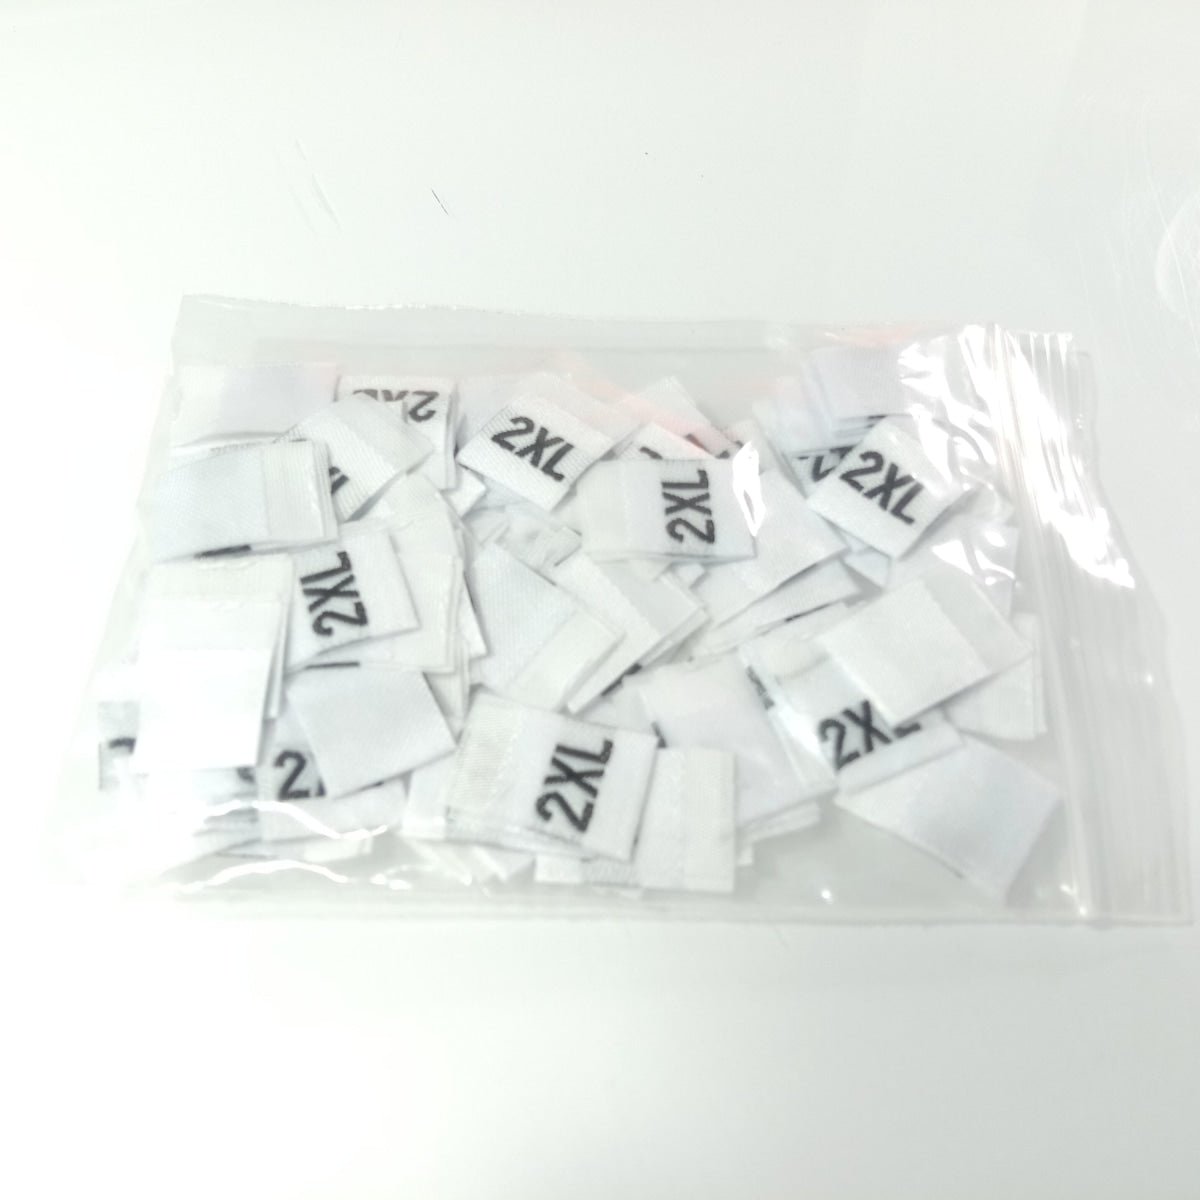 10-100pcs Clothing Size Label Tags XS S M L XL 2XL 3XL 4XL Black Text White Garment Clothes T Shirt Dress Fabric - S white - - Asia Sell